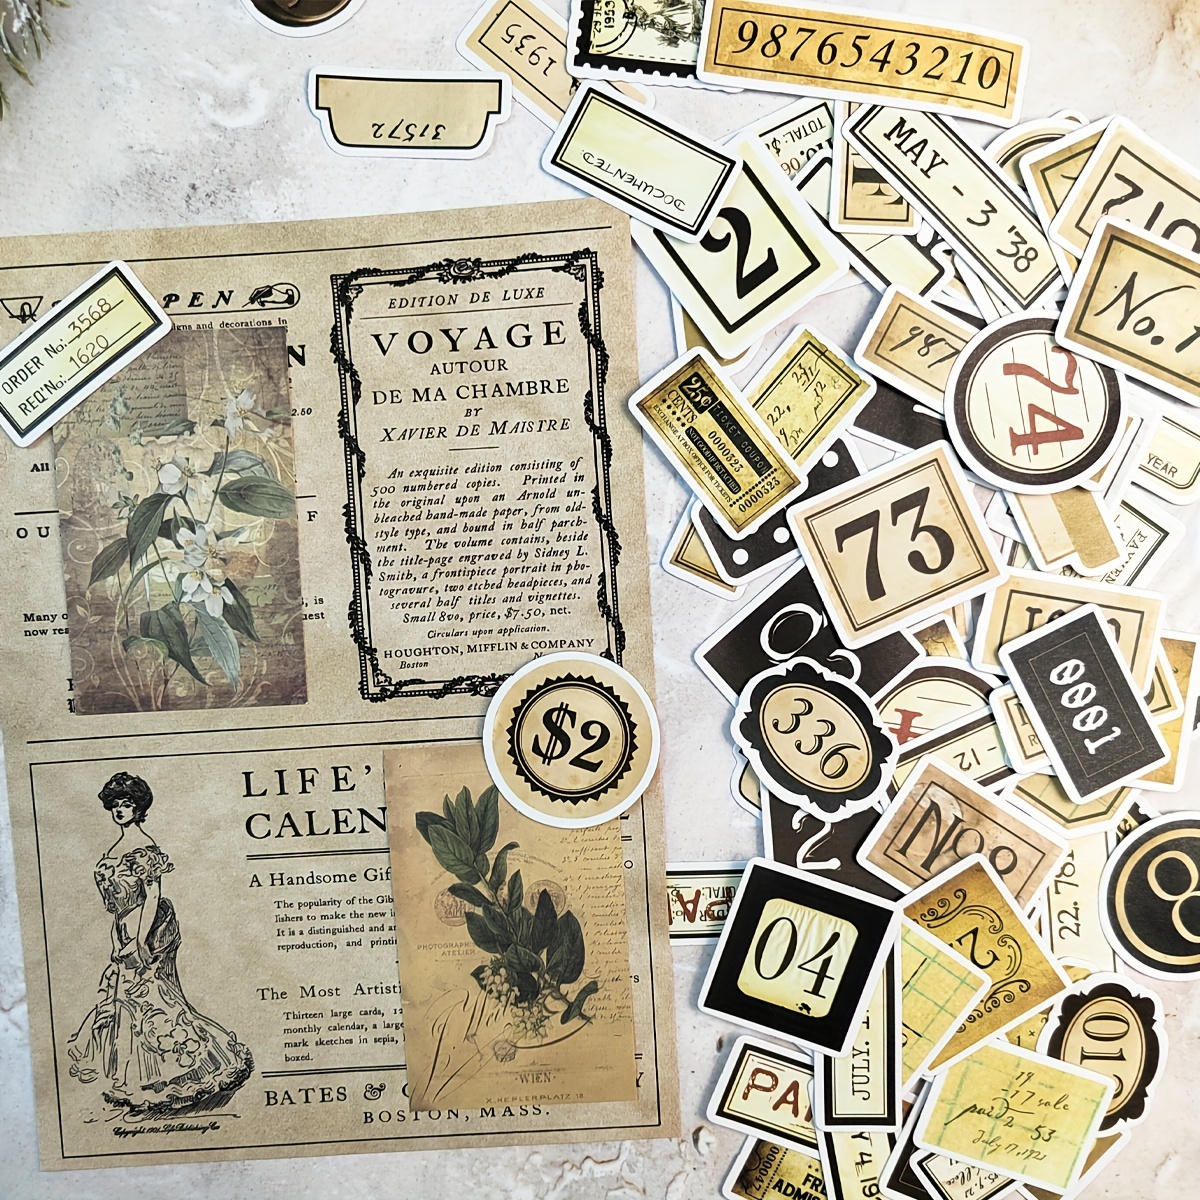 Old paper tags. Cardboard label, scrapbooking elements and vintage pri By  WinWin_artlab